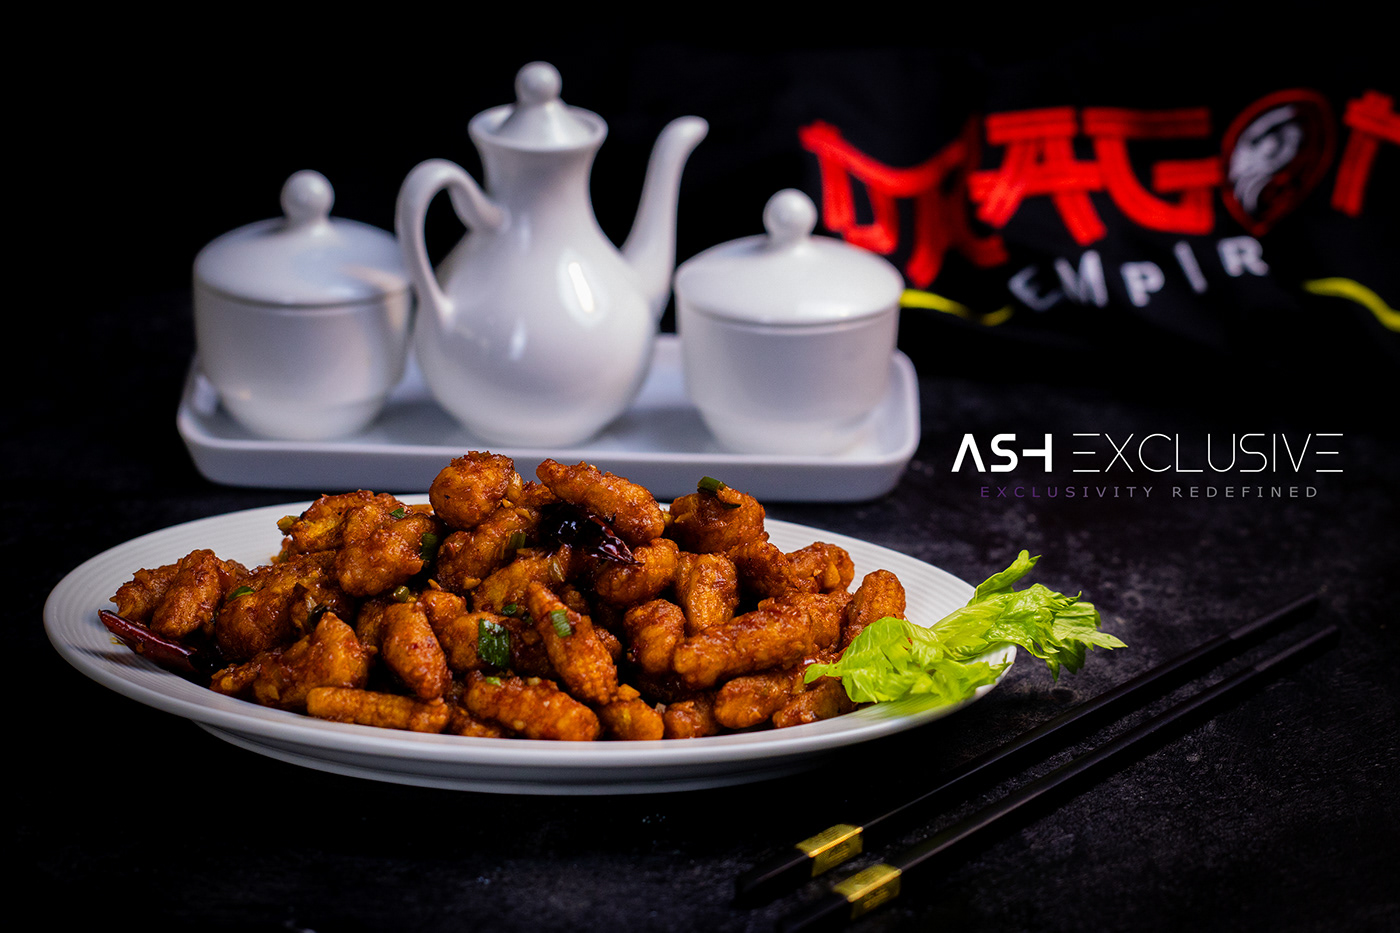 Chinese Food foodphotography mandarin cuisine restaurant chinese restaurant food menu food styling dubai food photographer dark food photography